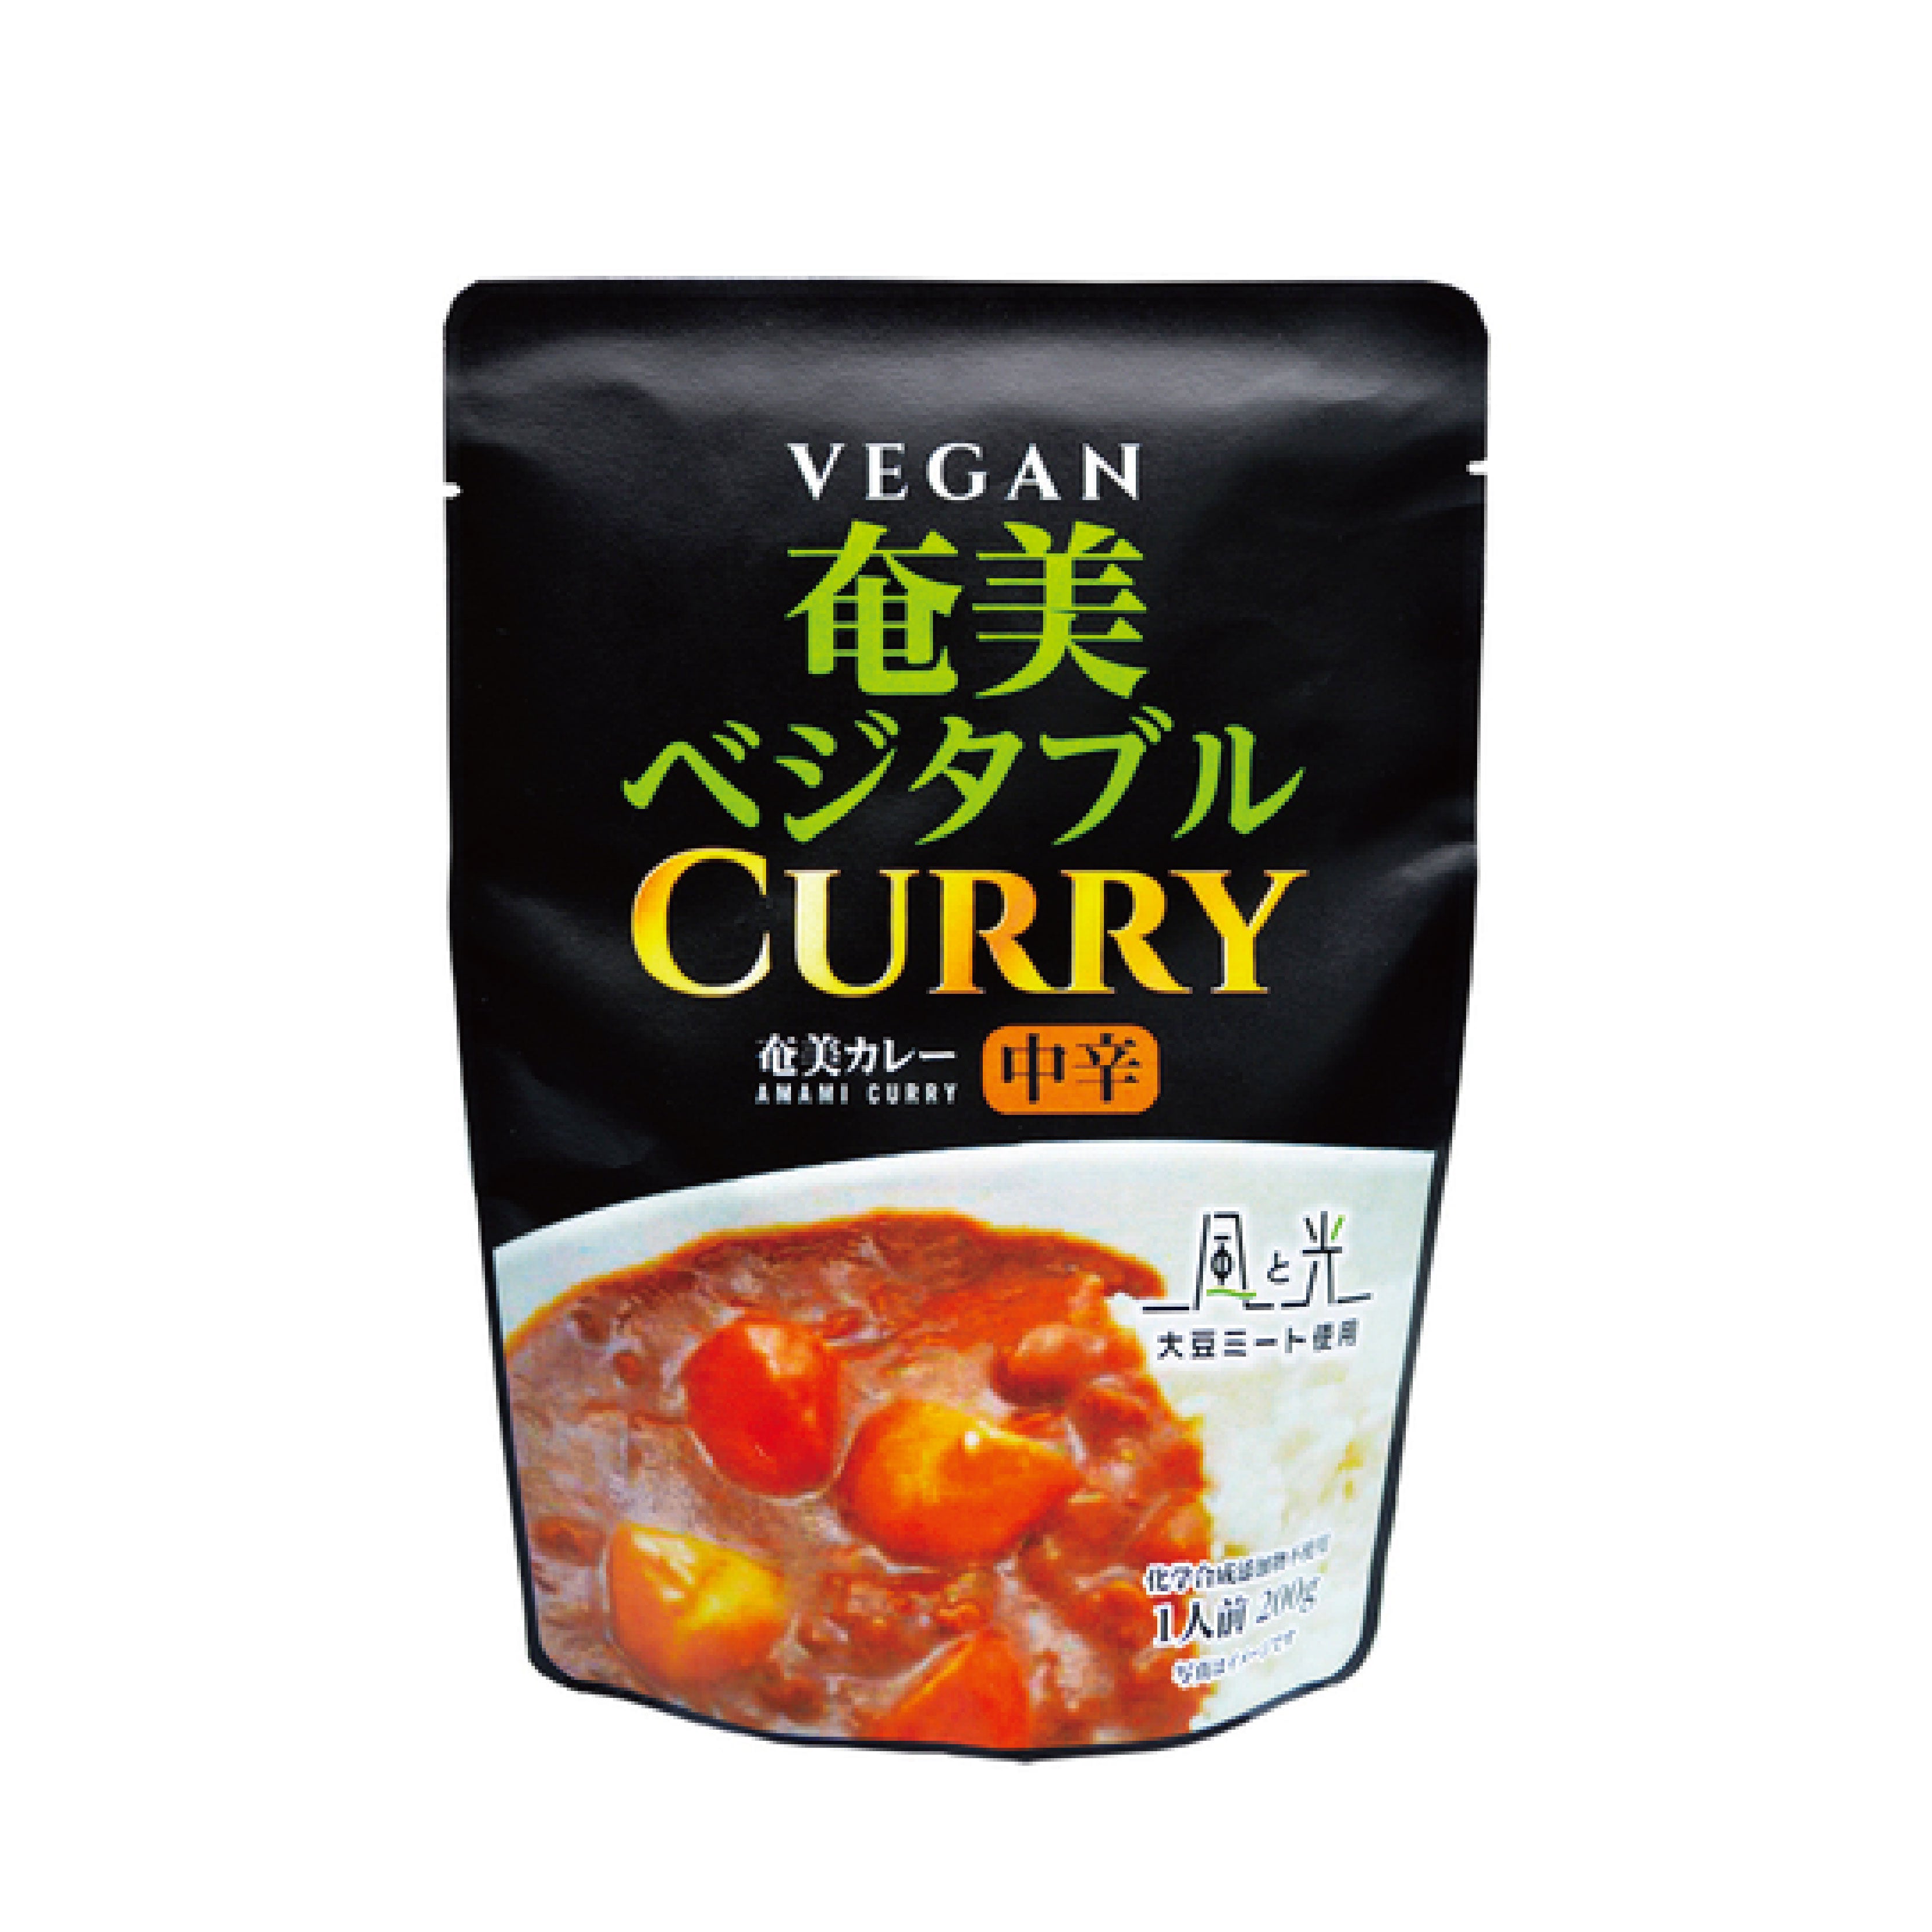 Kaze to Hikari Vegan Vegetable Curry [200g]